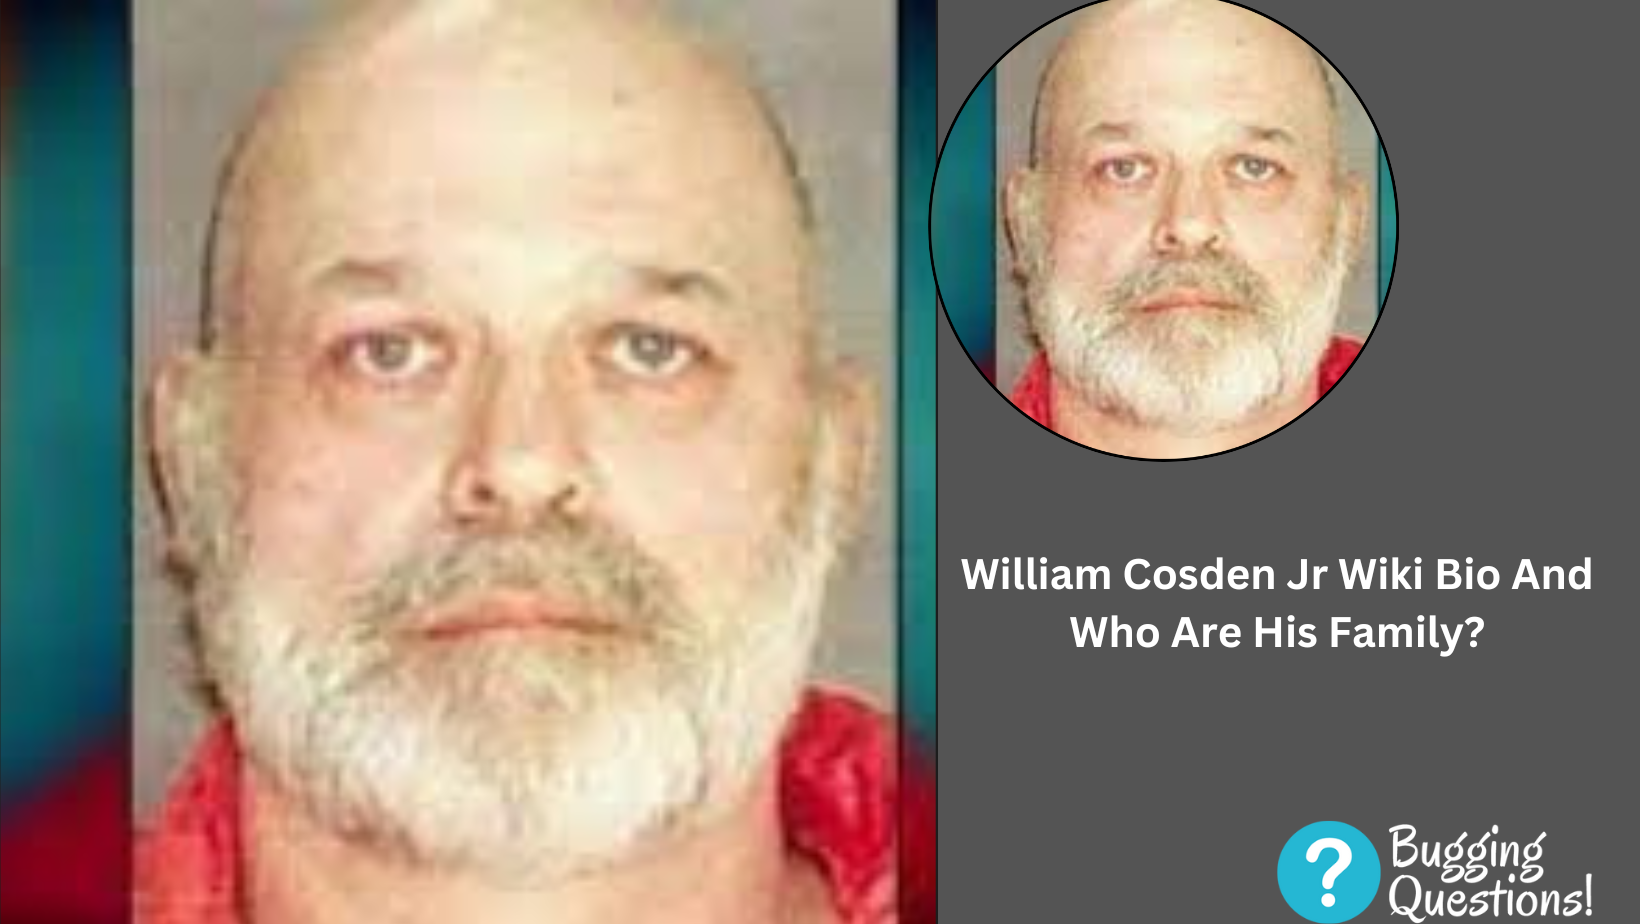 William Cosden Jr Wiki Bio And Who Are His Family?